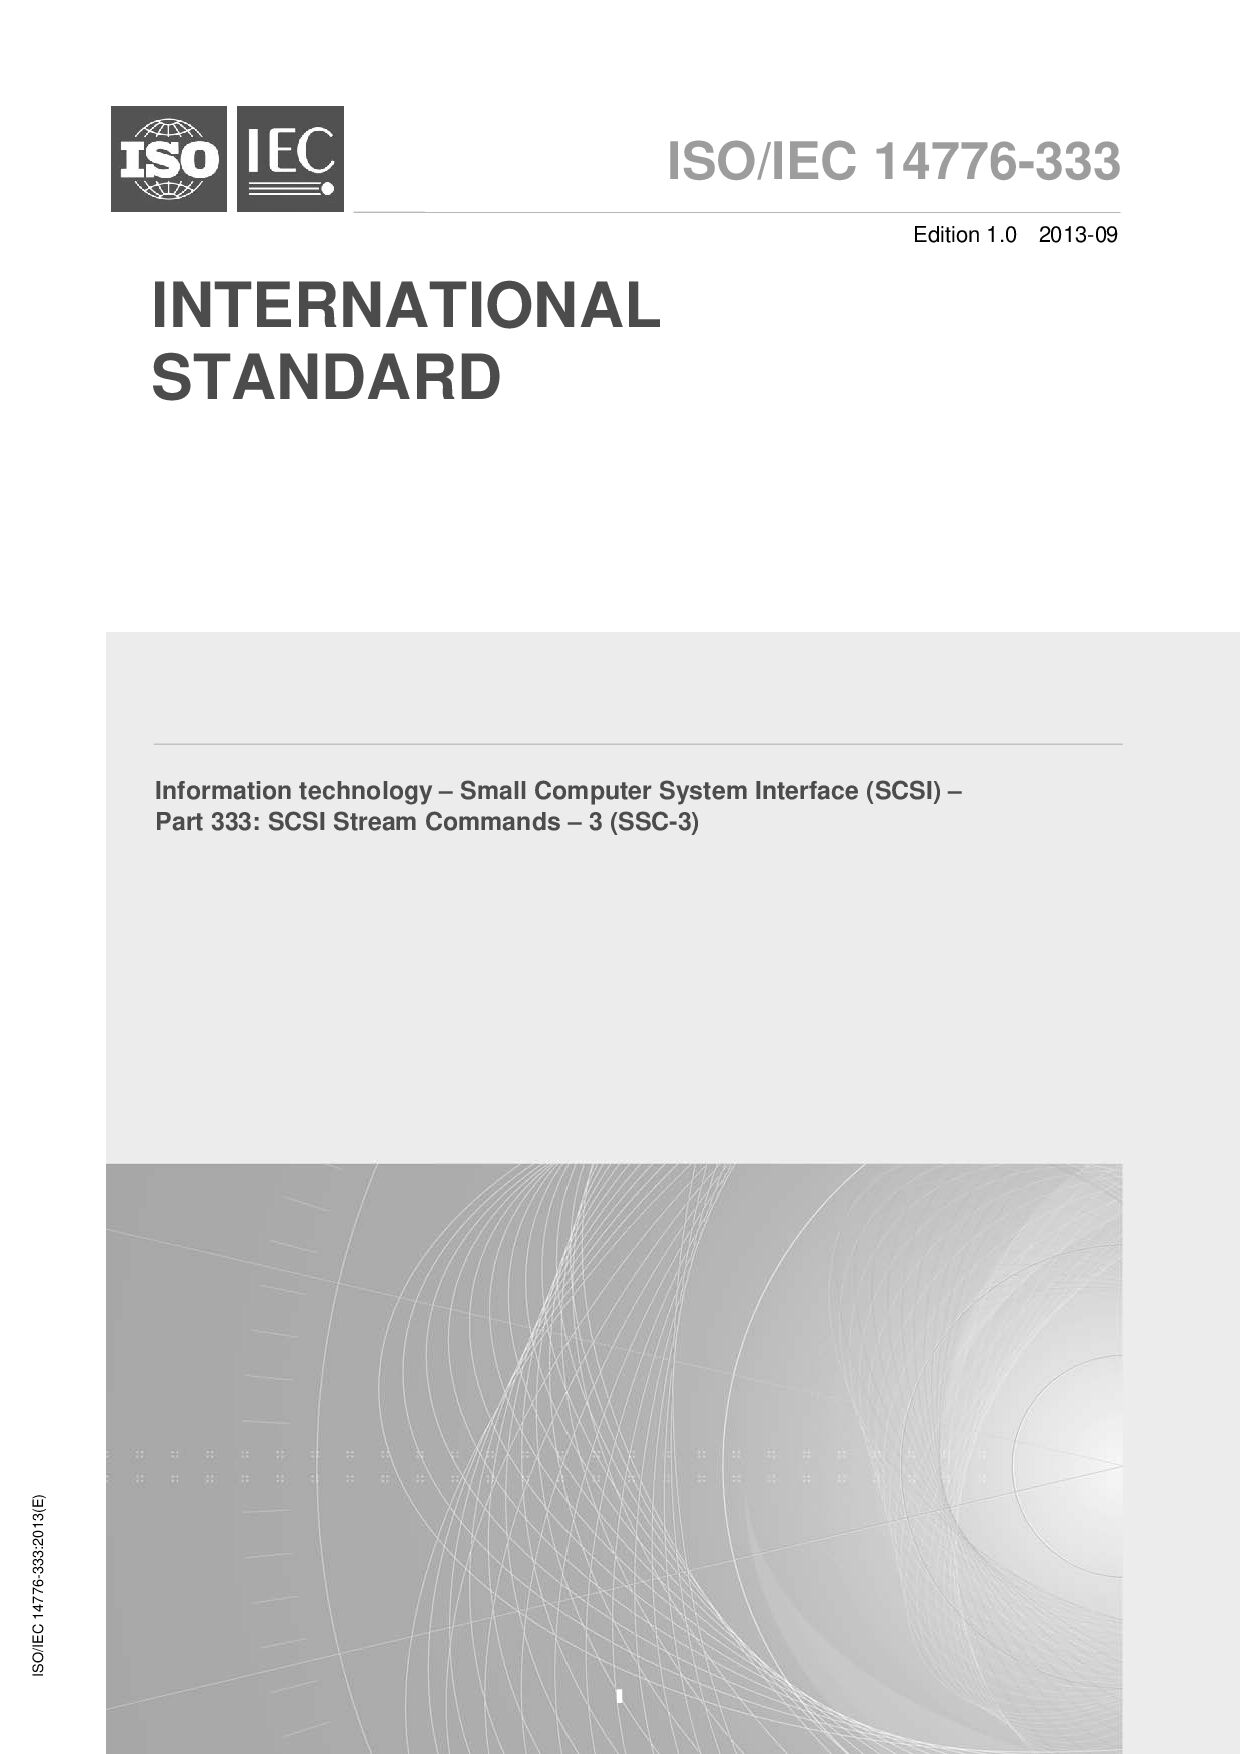 ISO/IEC 14776-333:2013